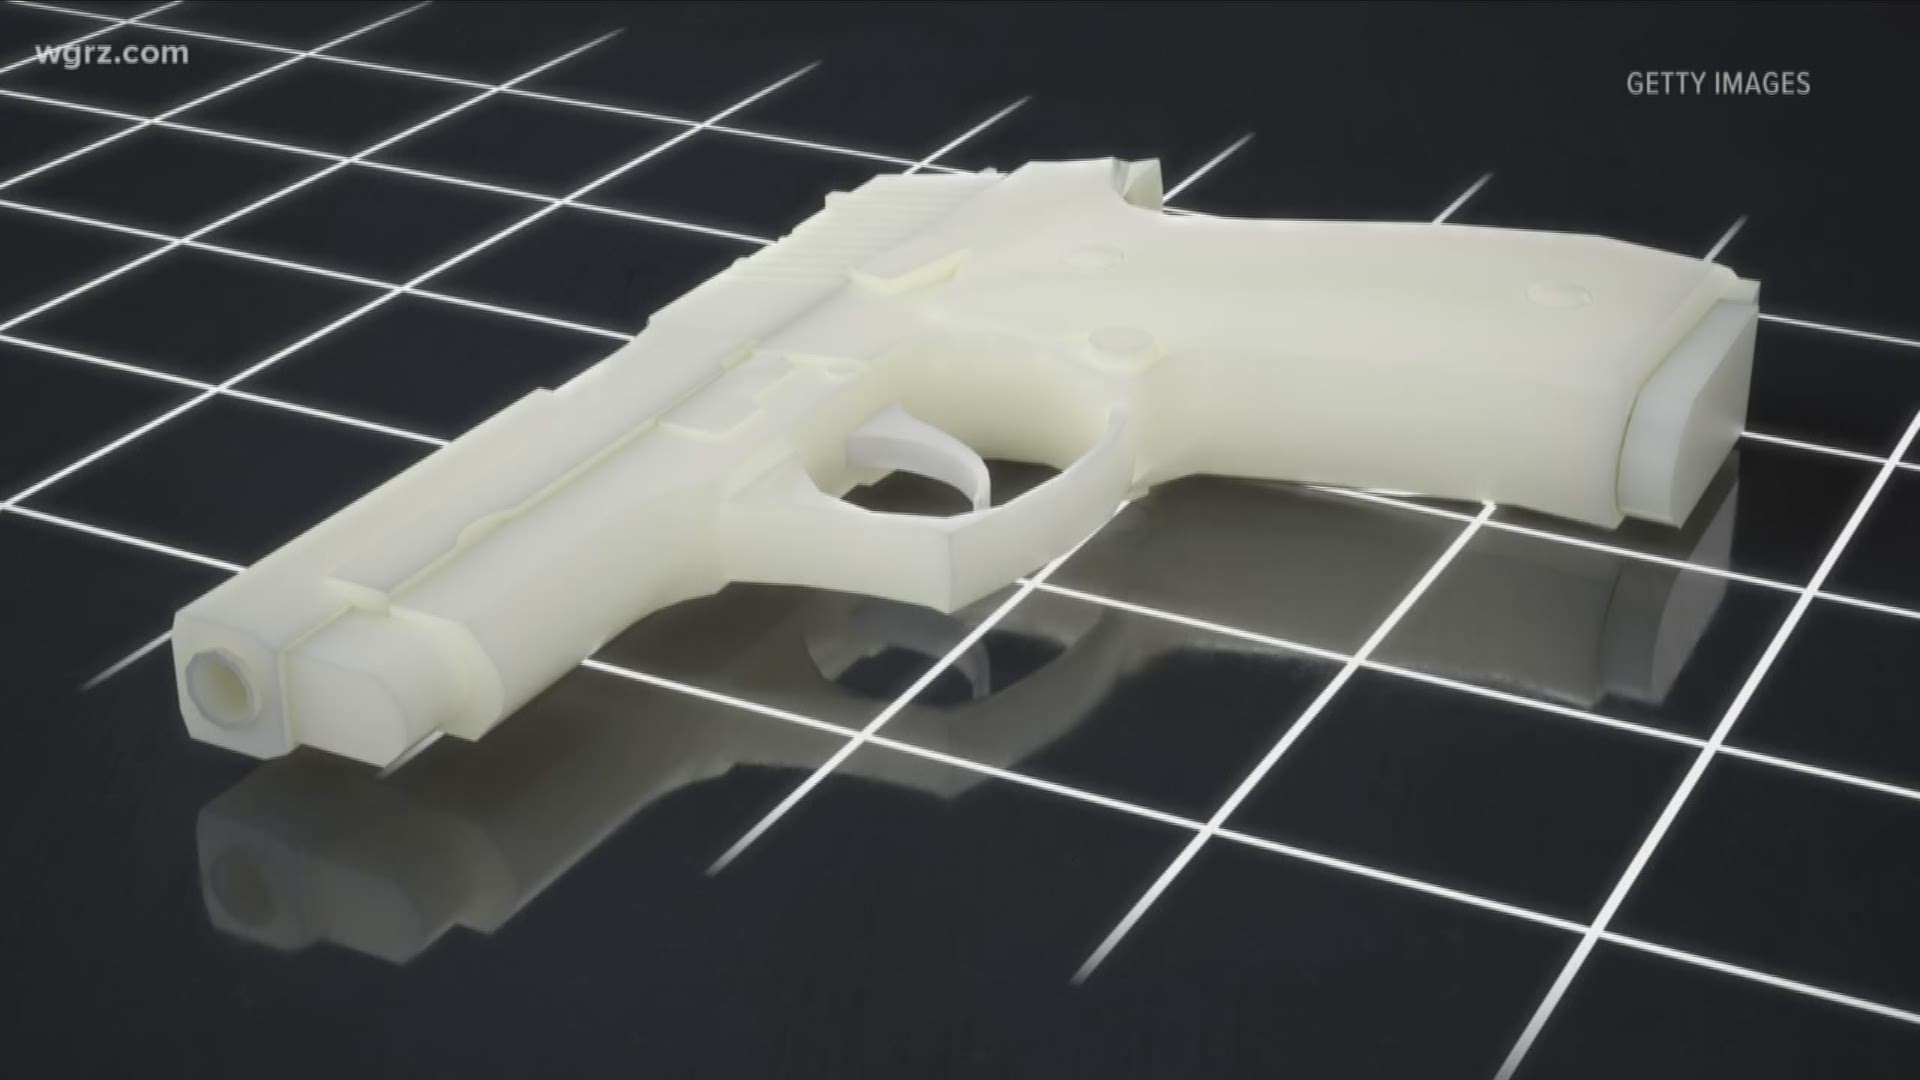 Assembly & Senate Pass 3D Printed Gun Ban